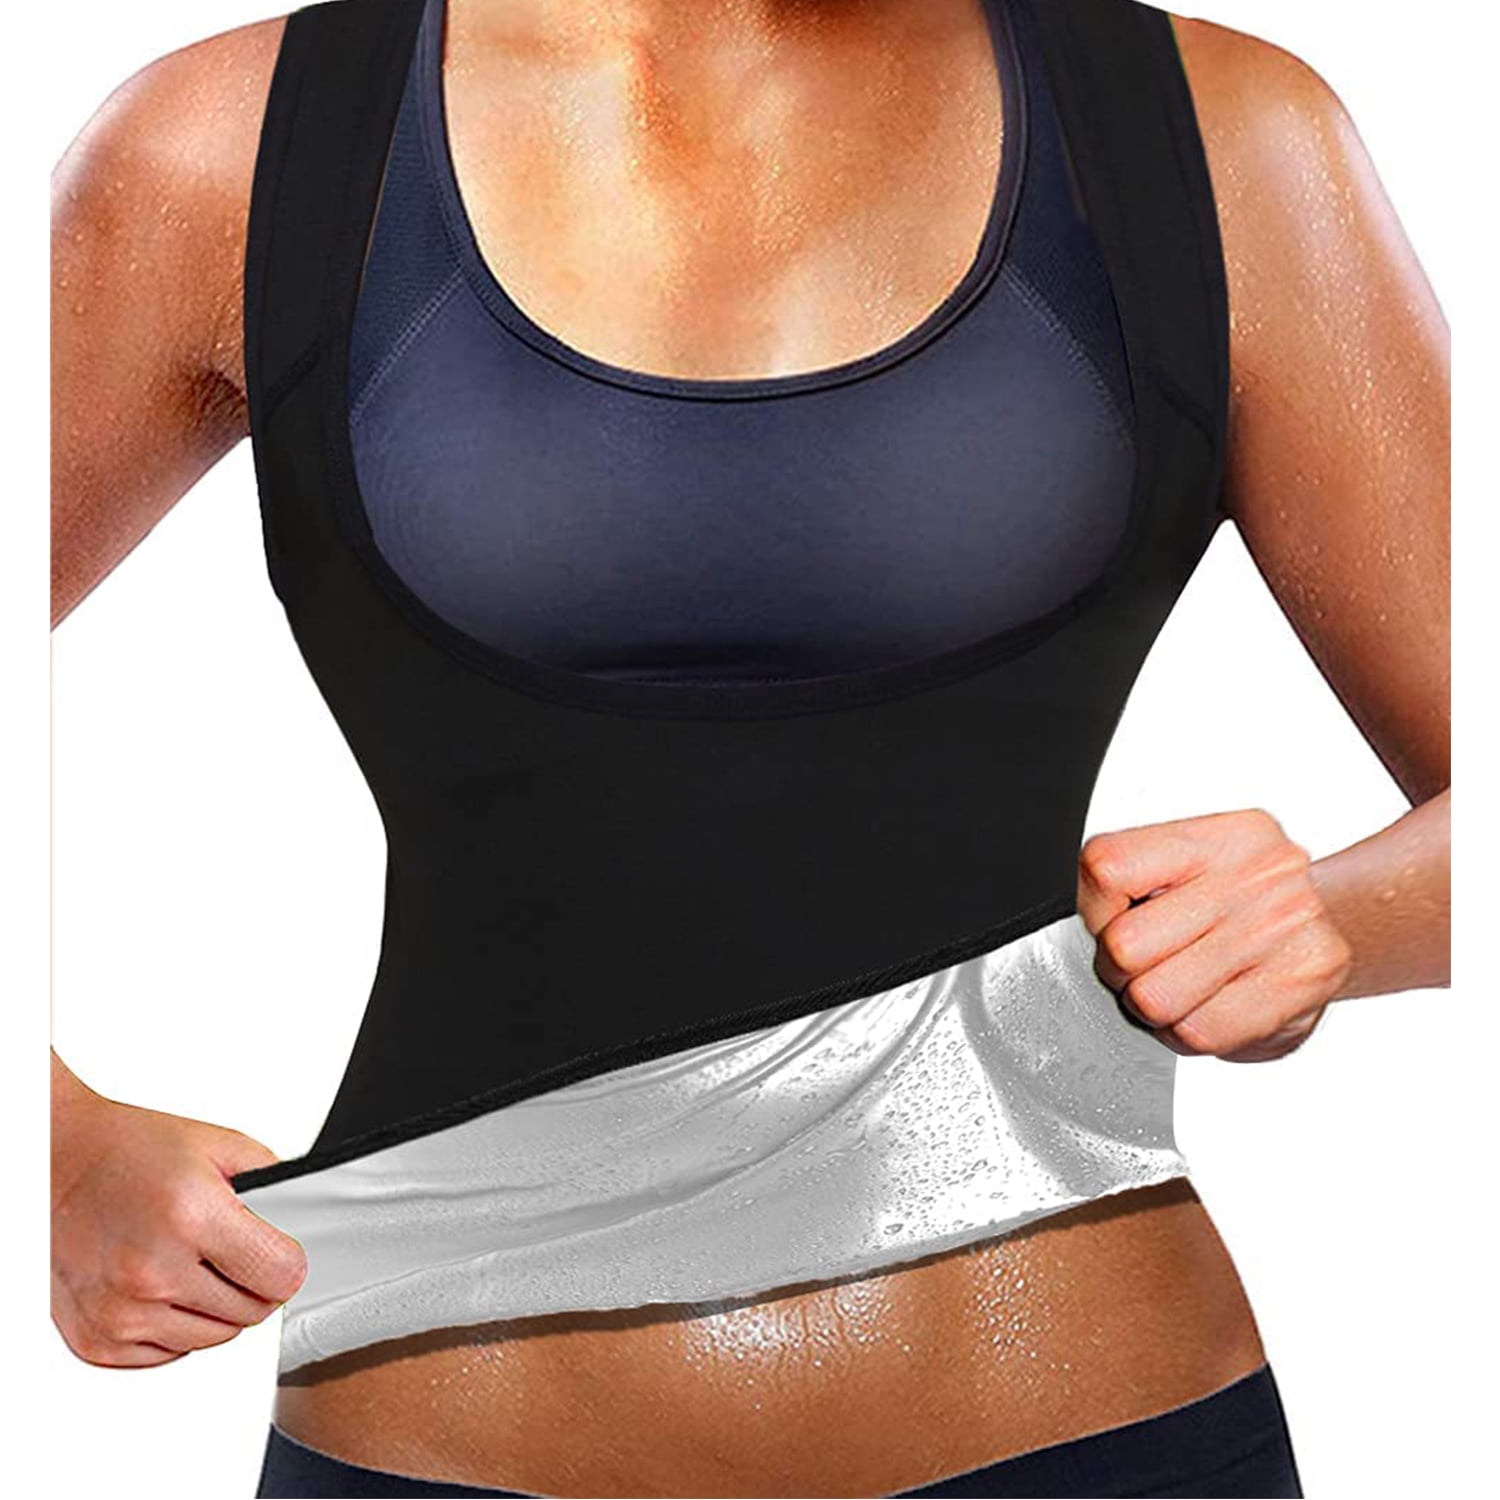 Details about   Women Body Shaper Hot Sauna Sweat Stomach Slimming Waist Pant Fat Burner Suit US 